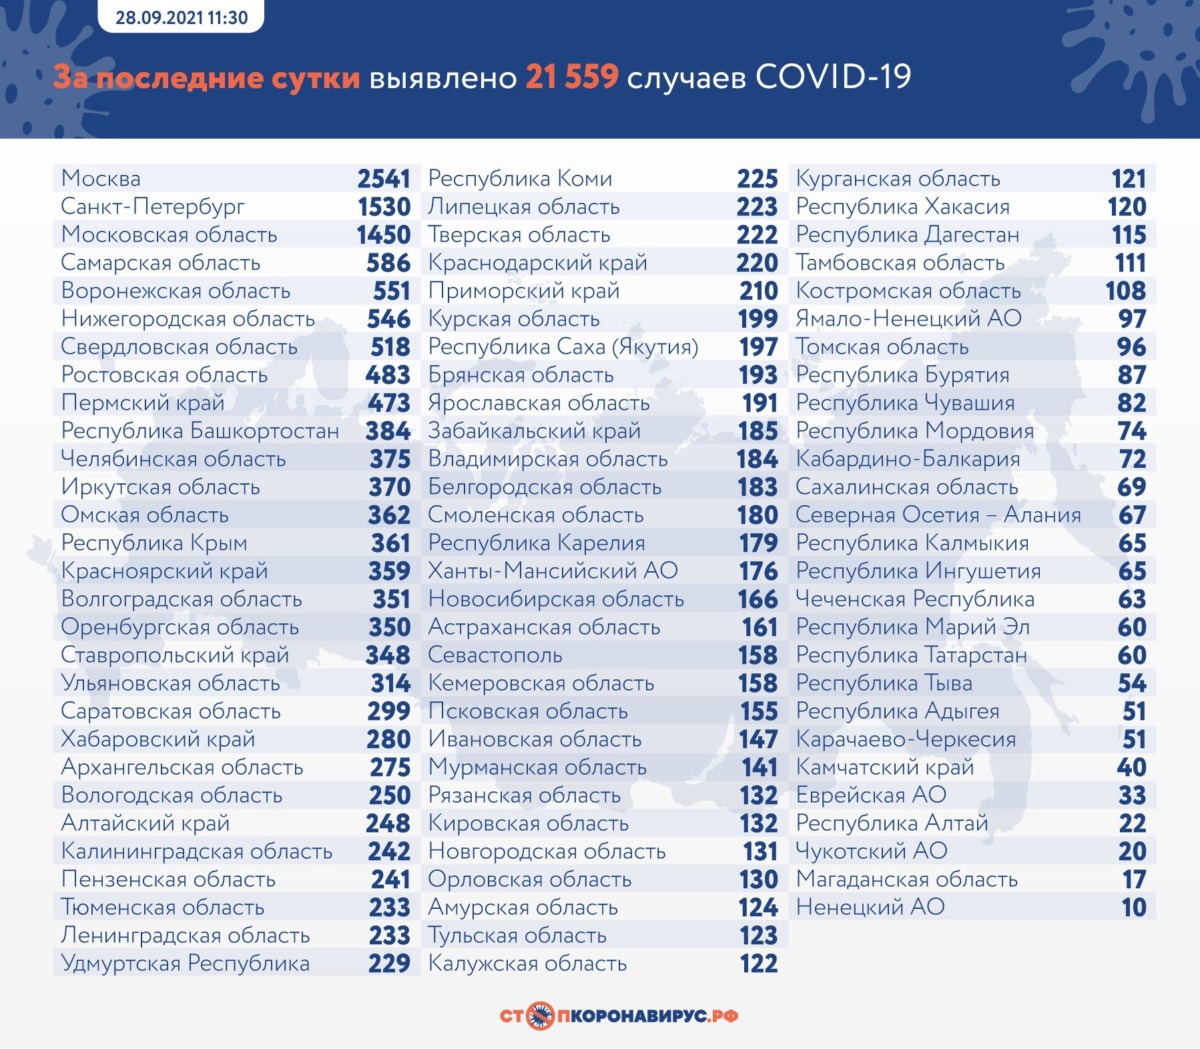 Оперативная статистика по коронавирусу в России на 28 сентября